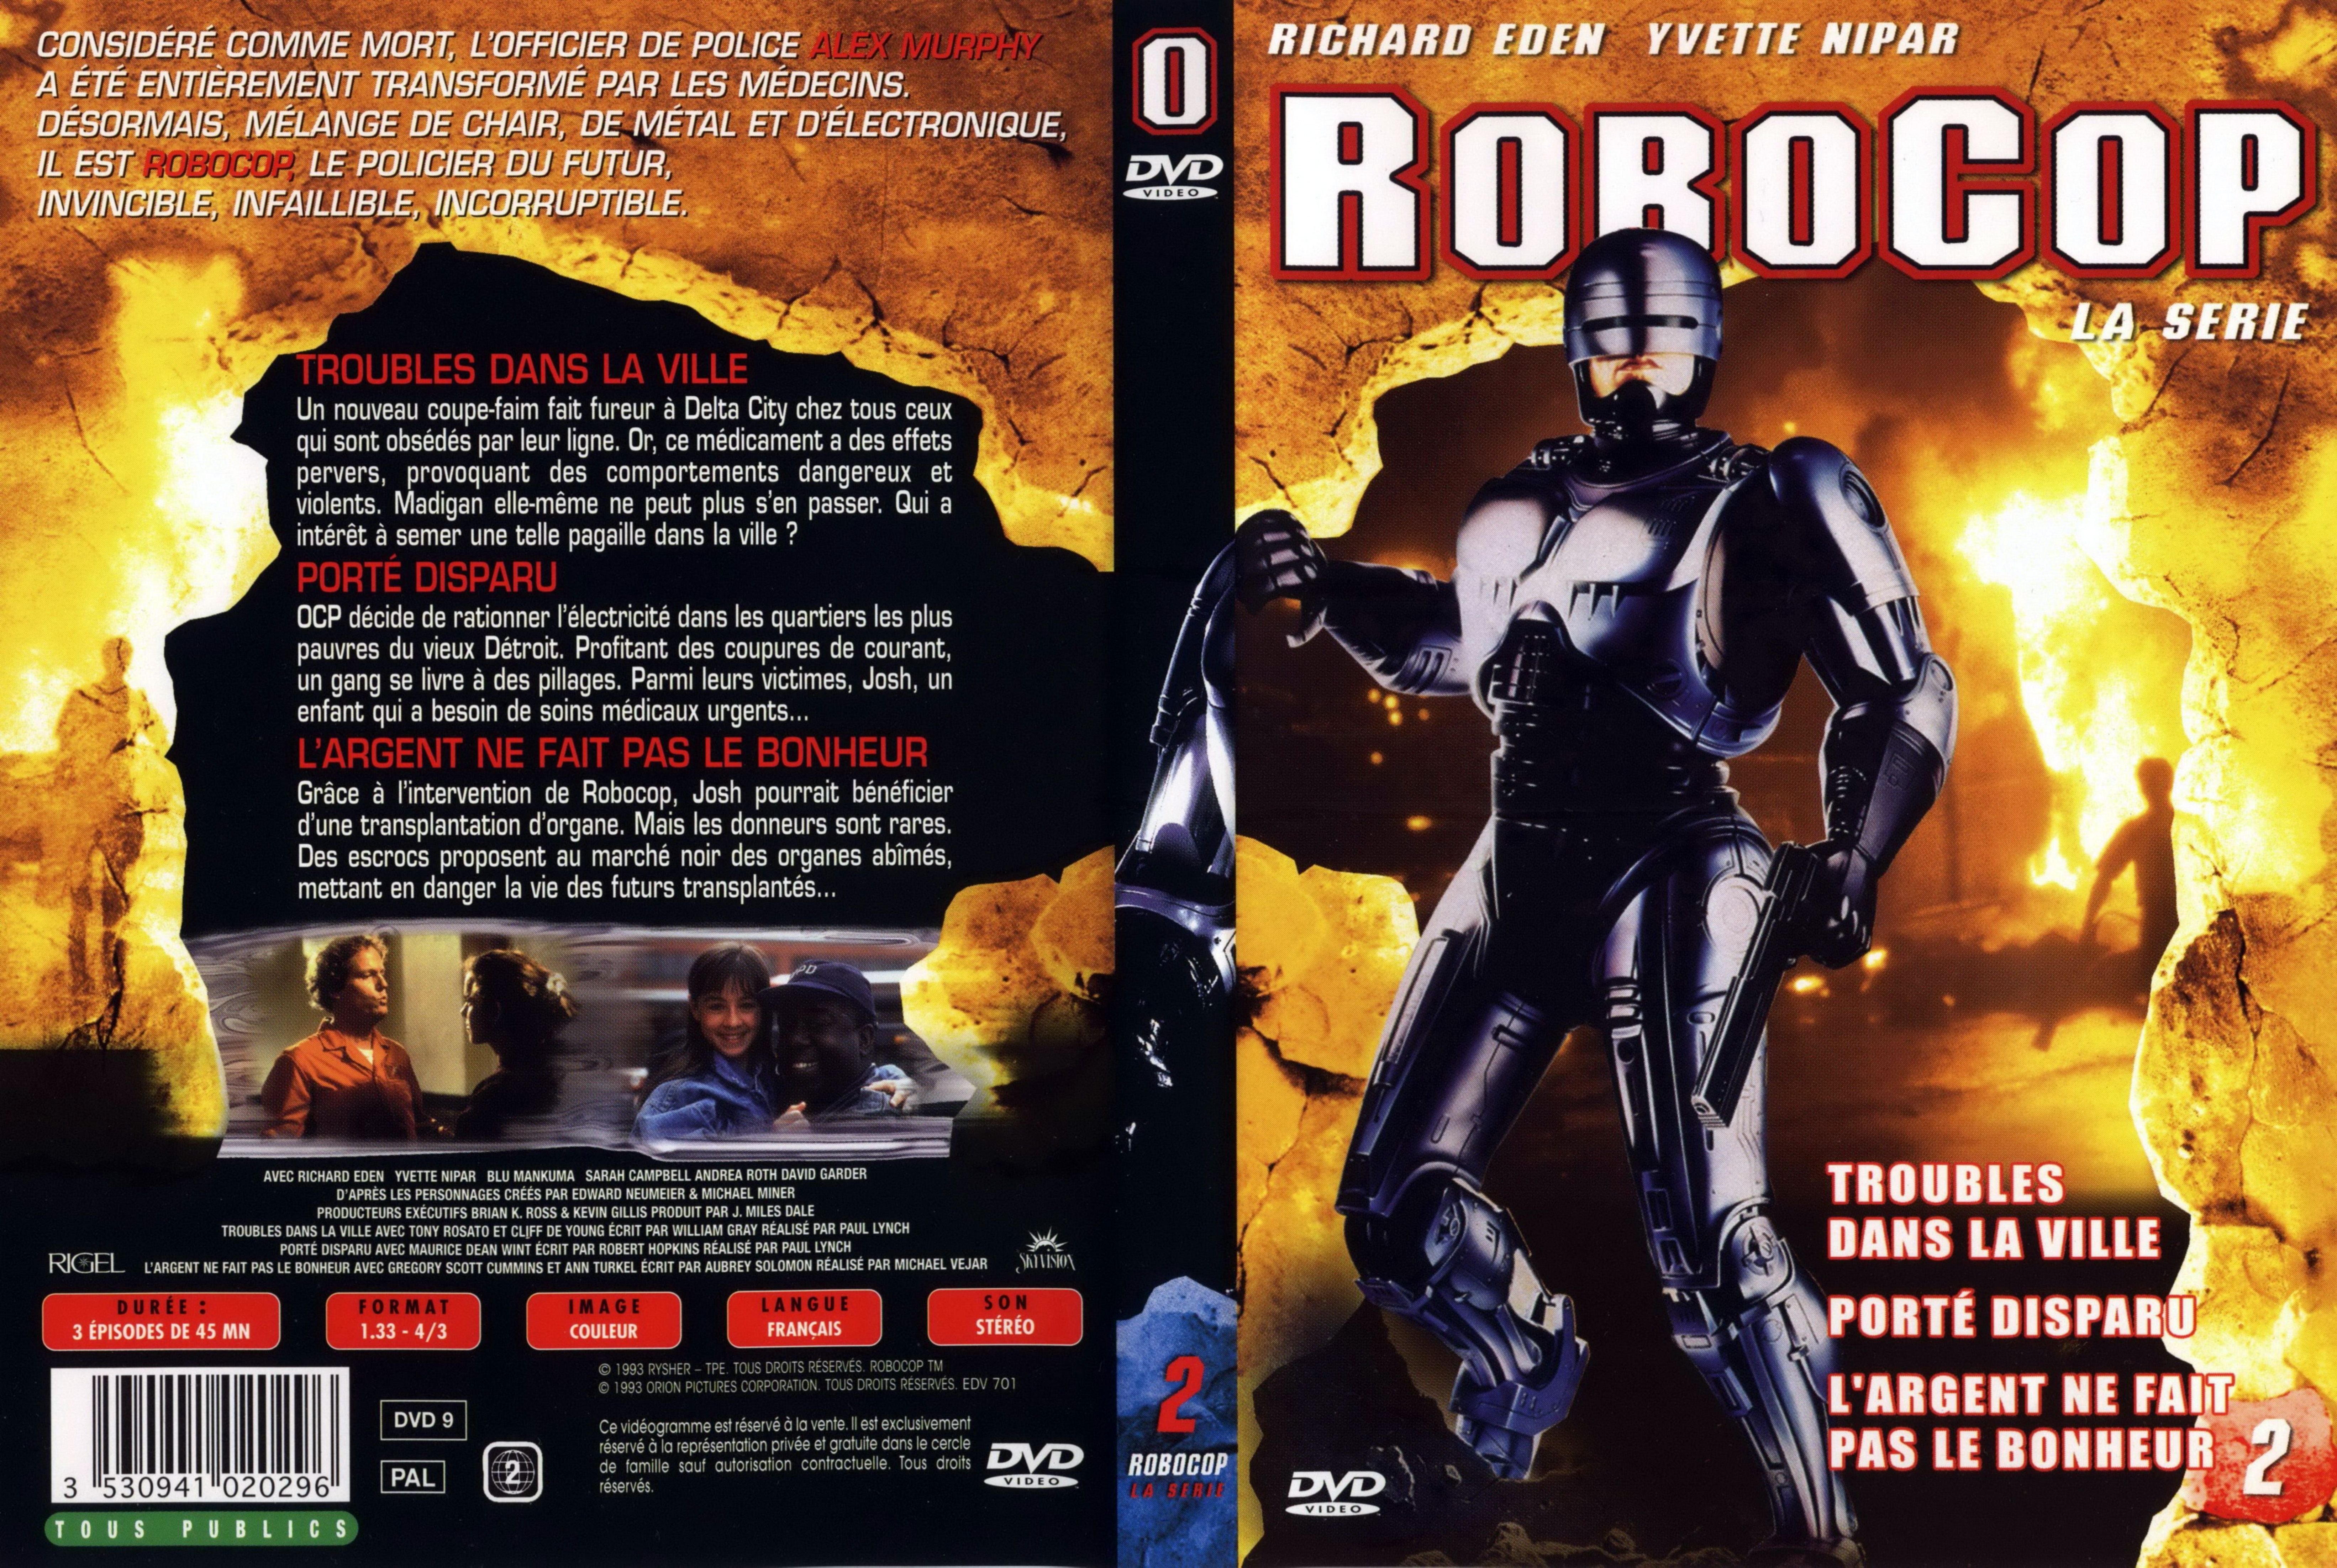 Jaquette DVD Robocop la srie vol 2